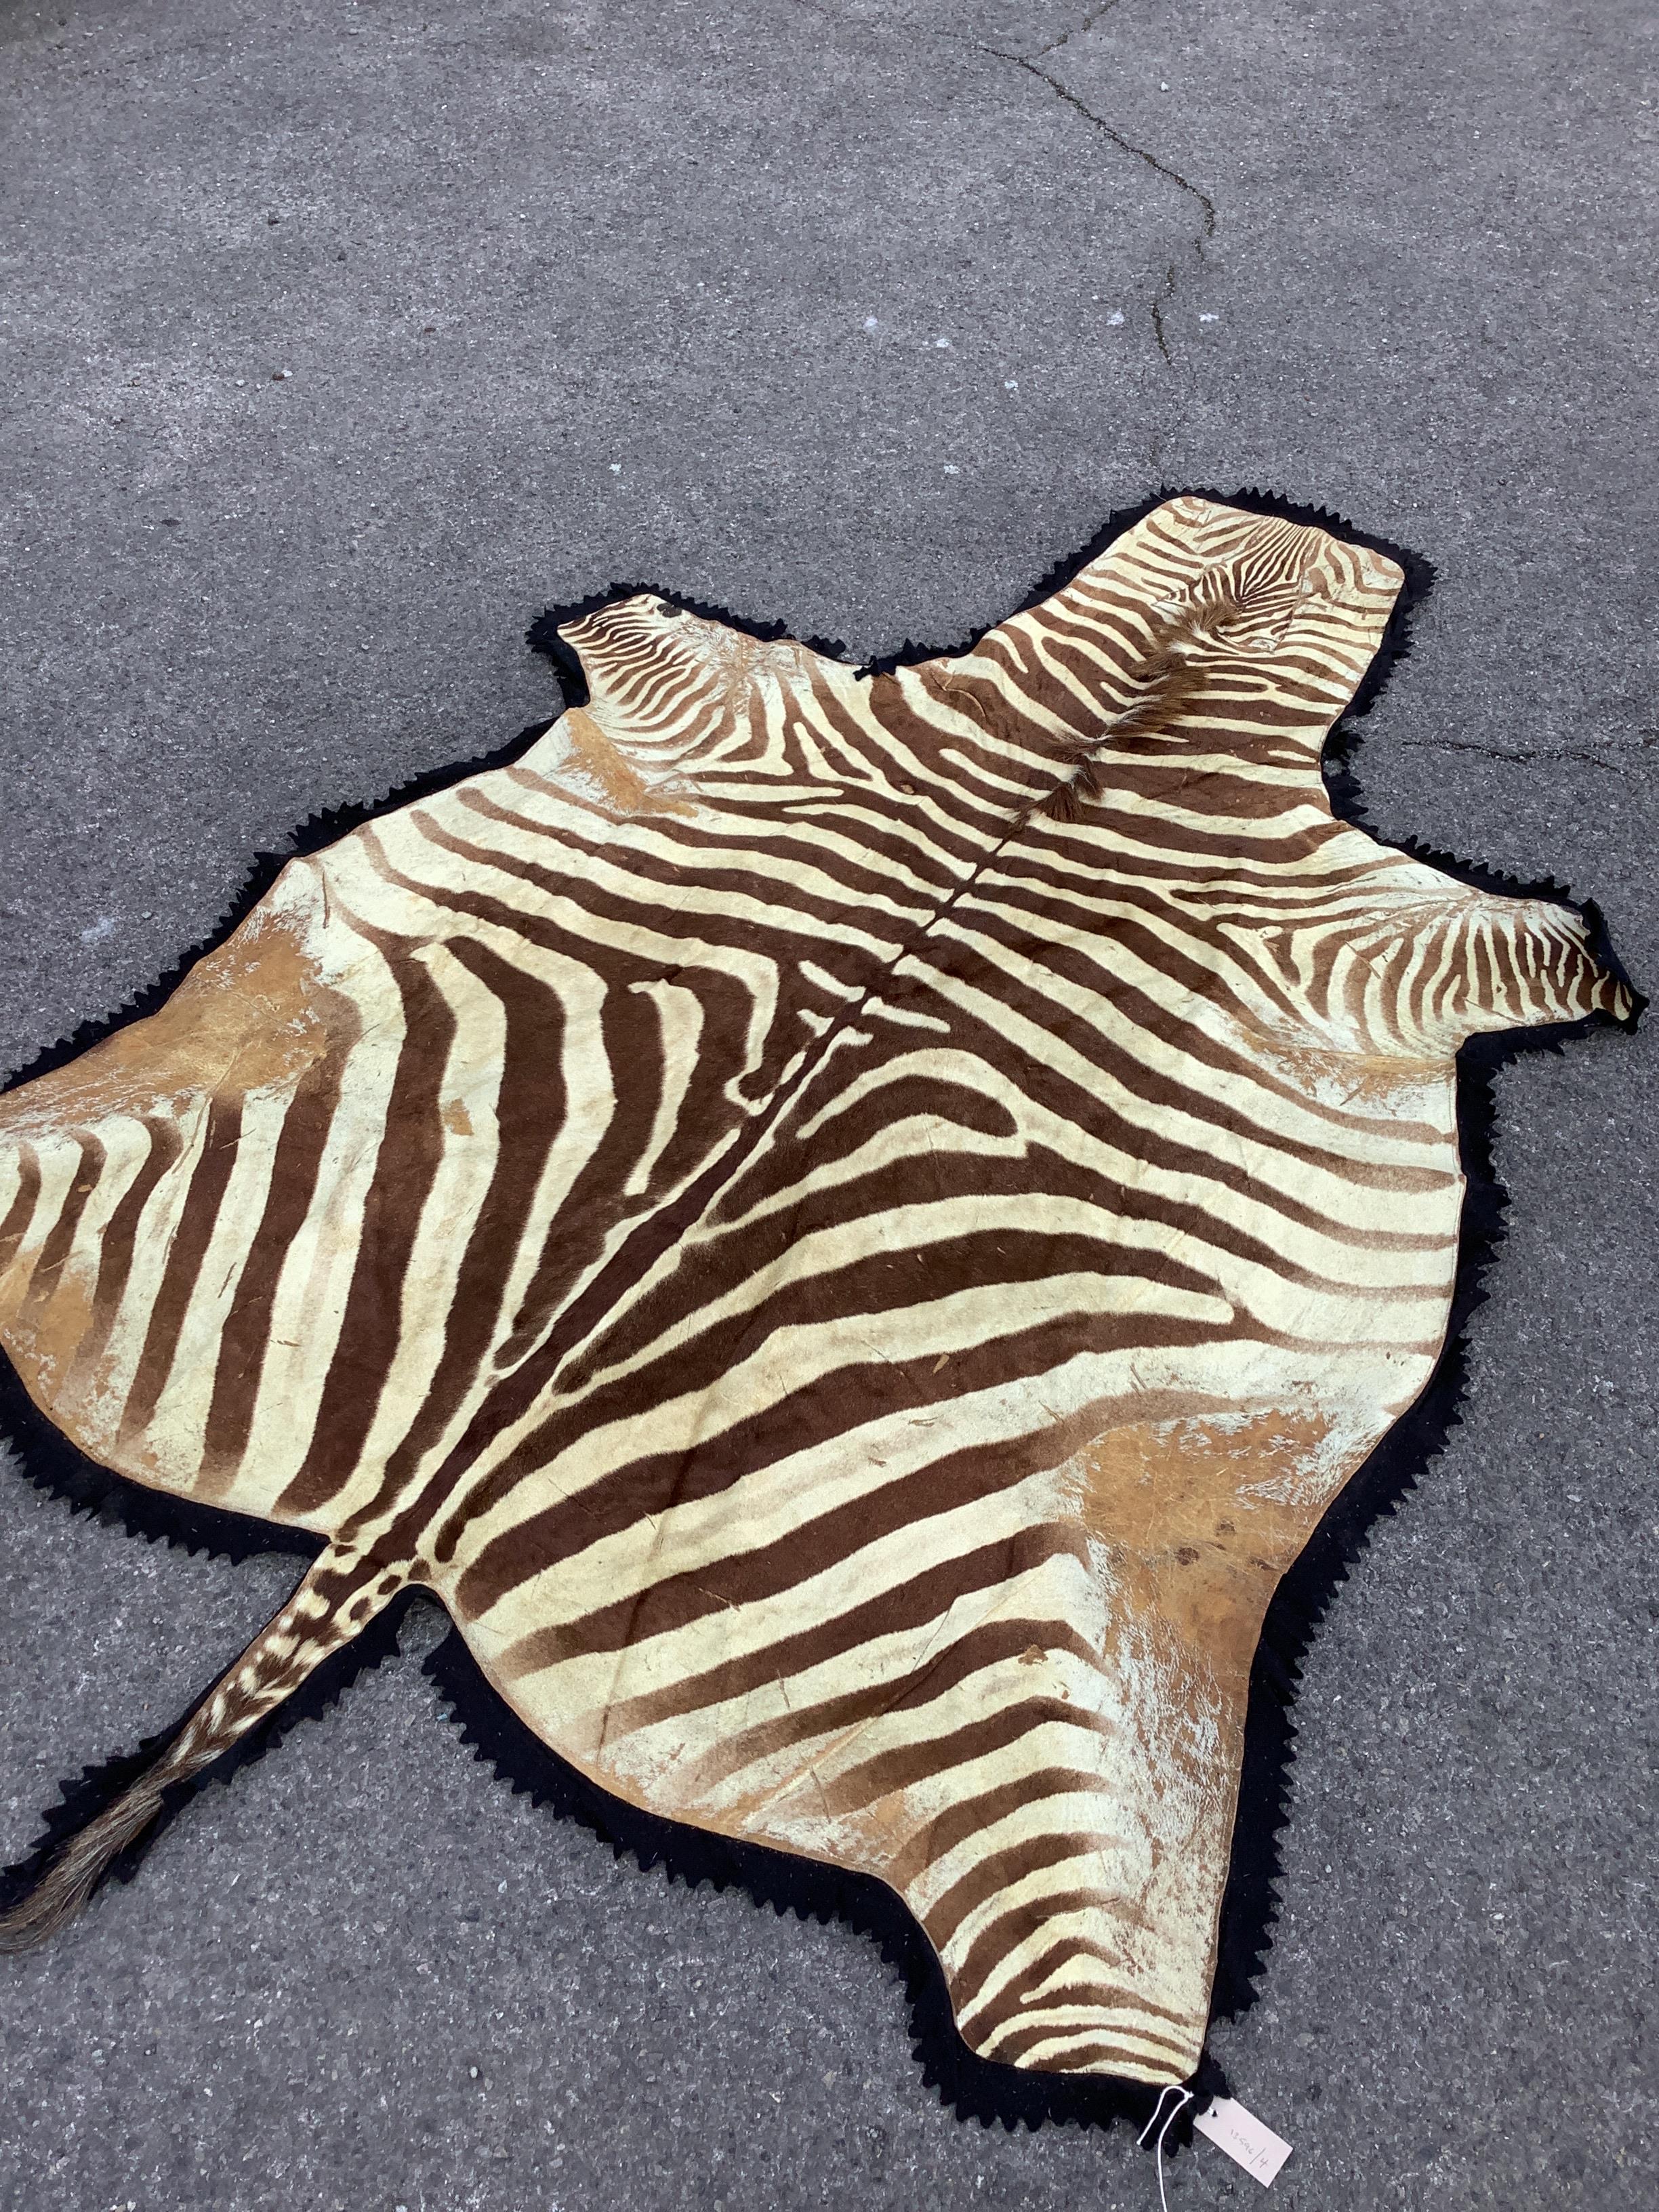 A felt backed zebra skin rug, 250 x 104cm - Image 2 of 2